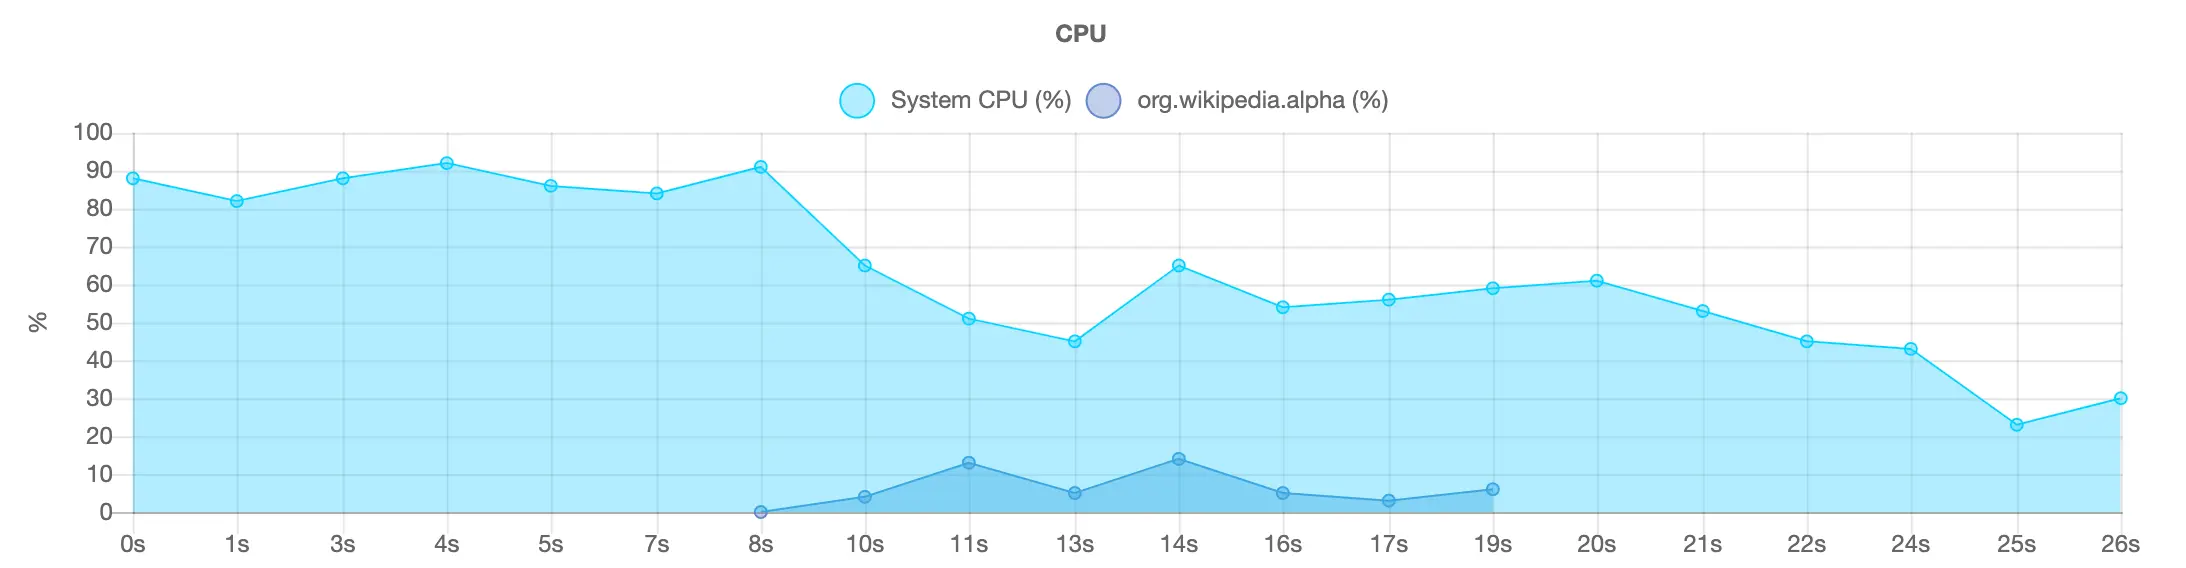 CPU usage chart